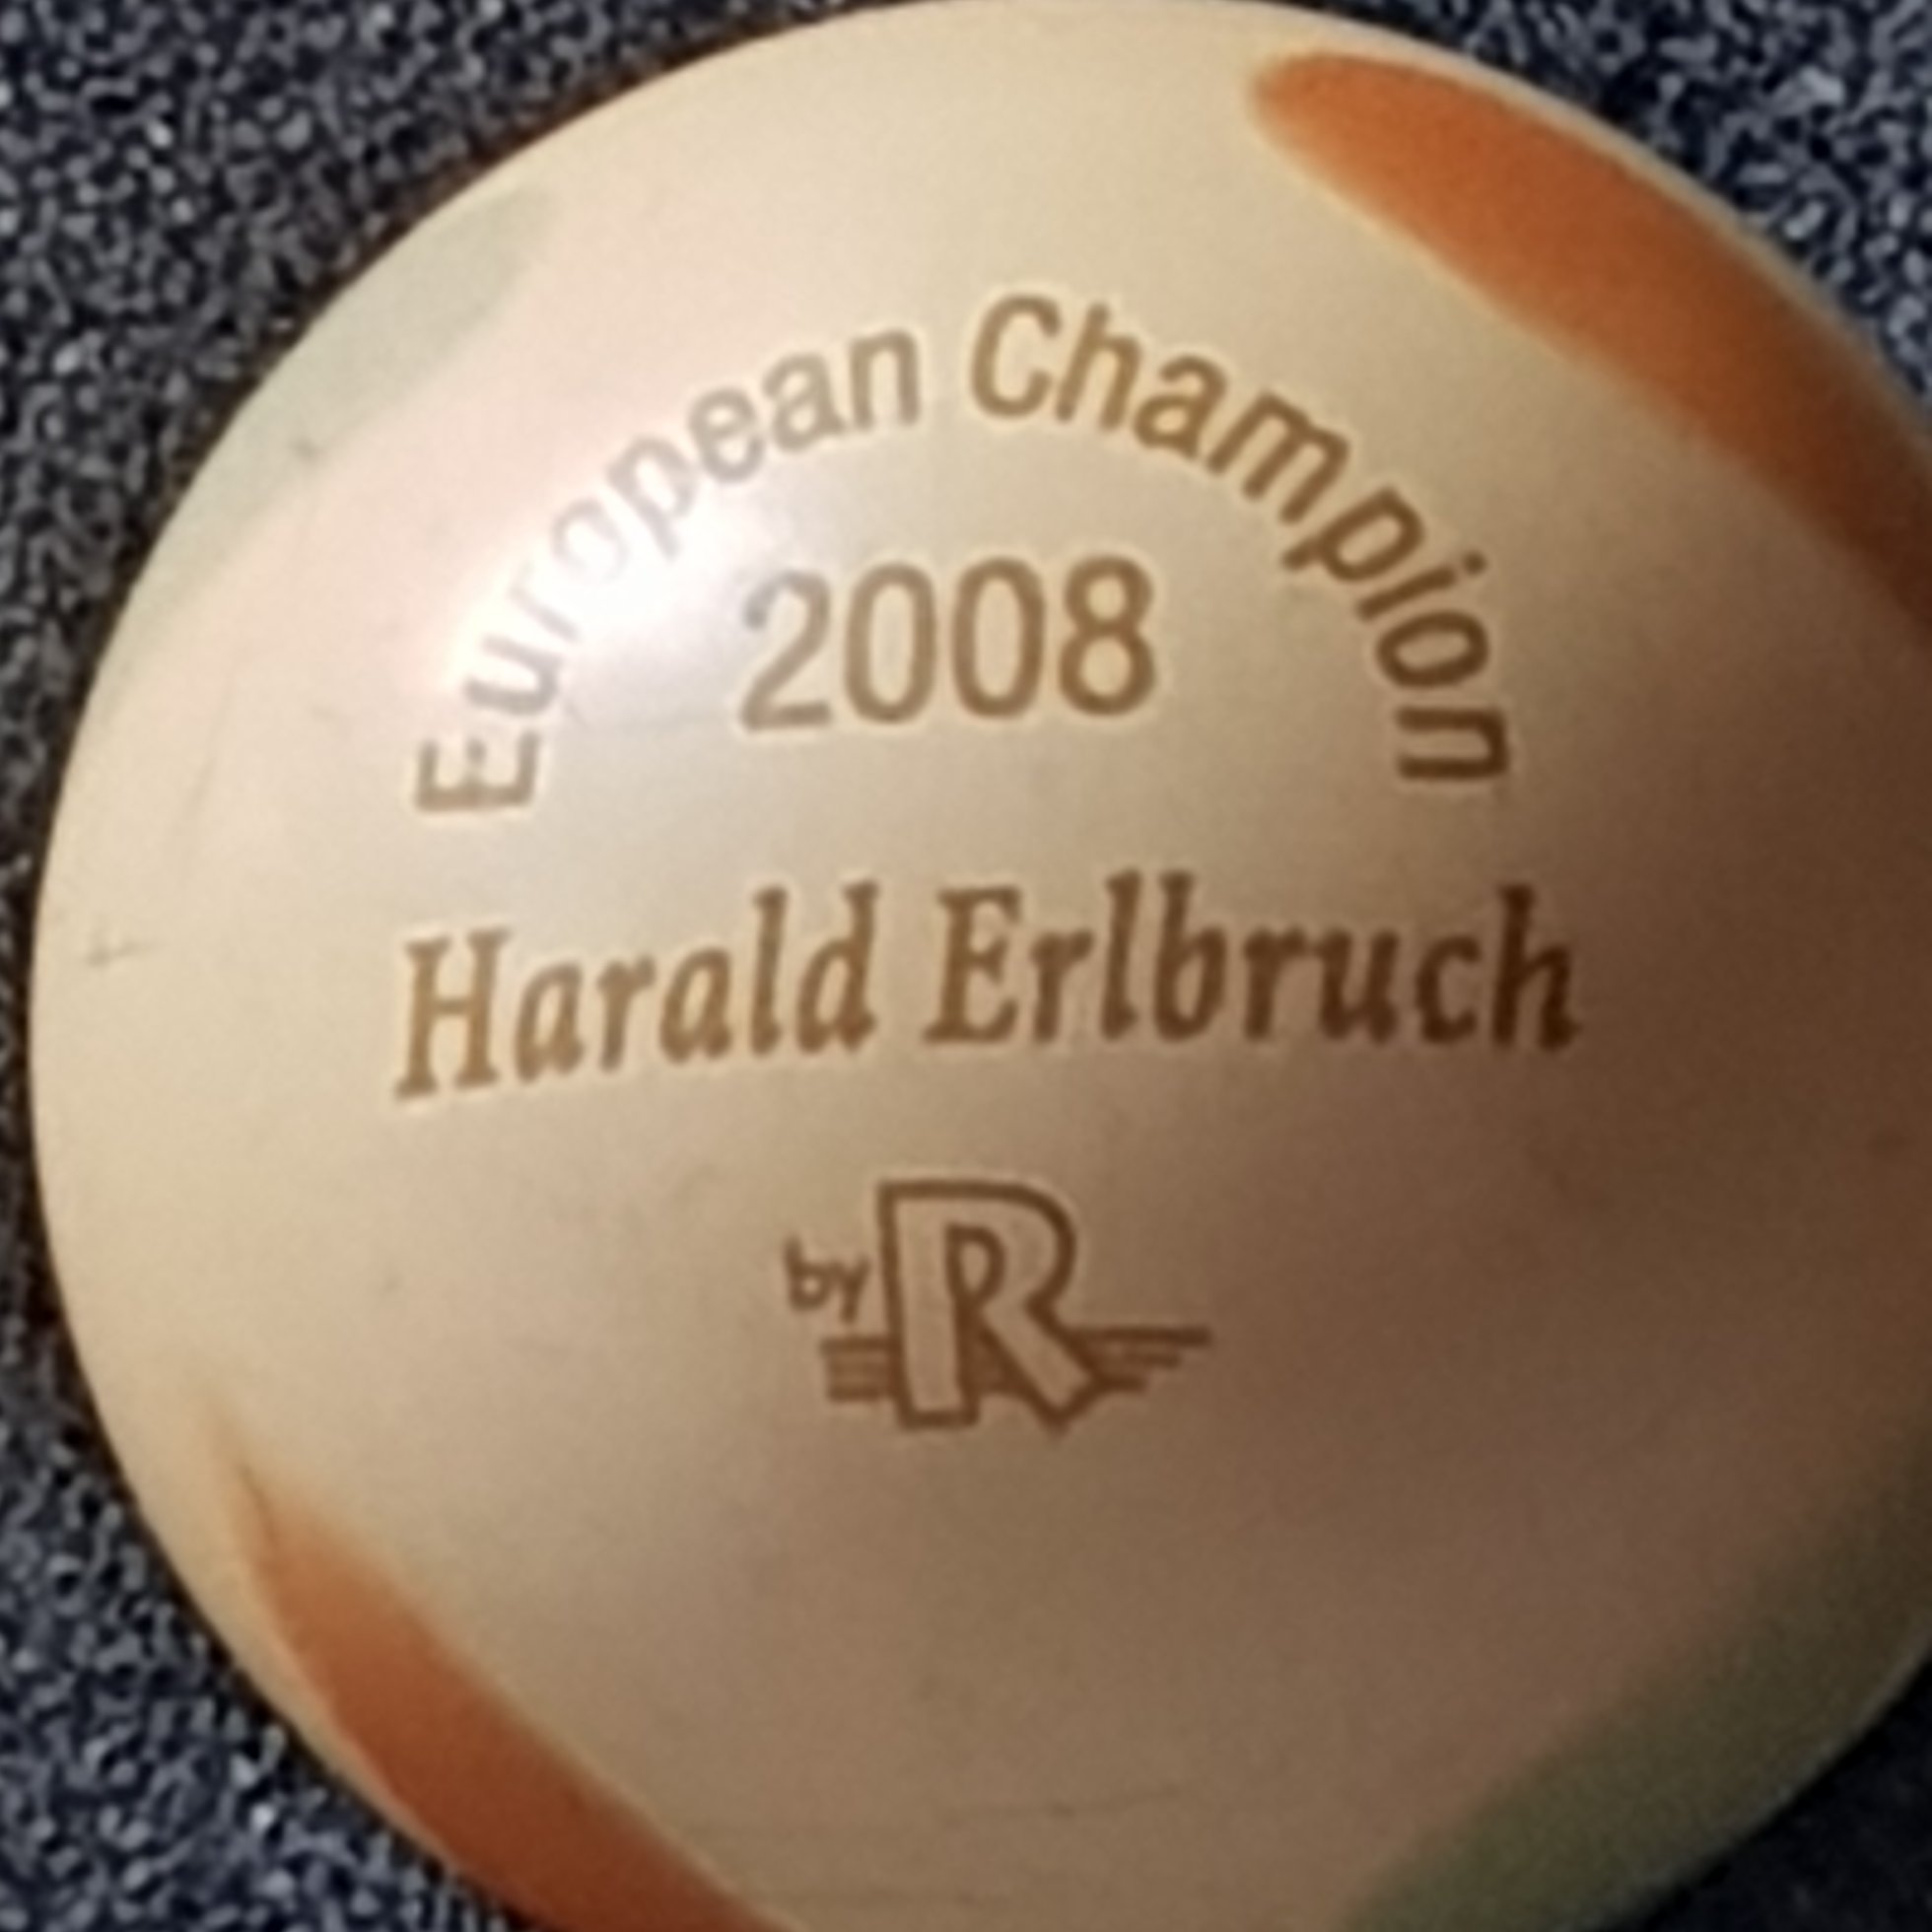 european_champion_2008_harald_erlbruch.jpg